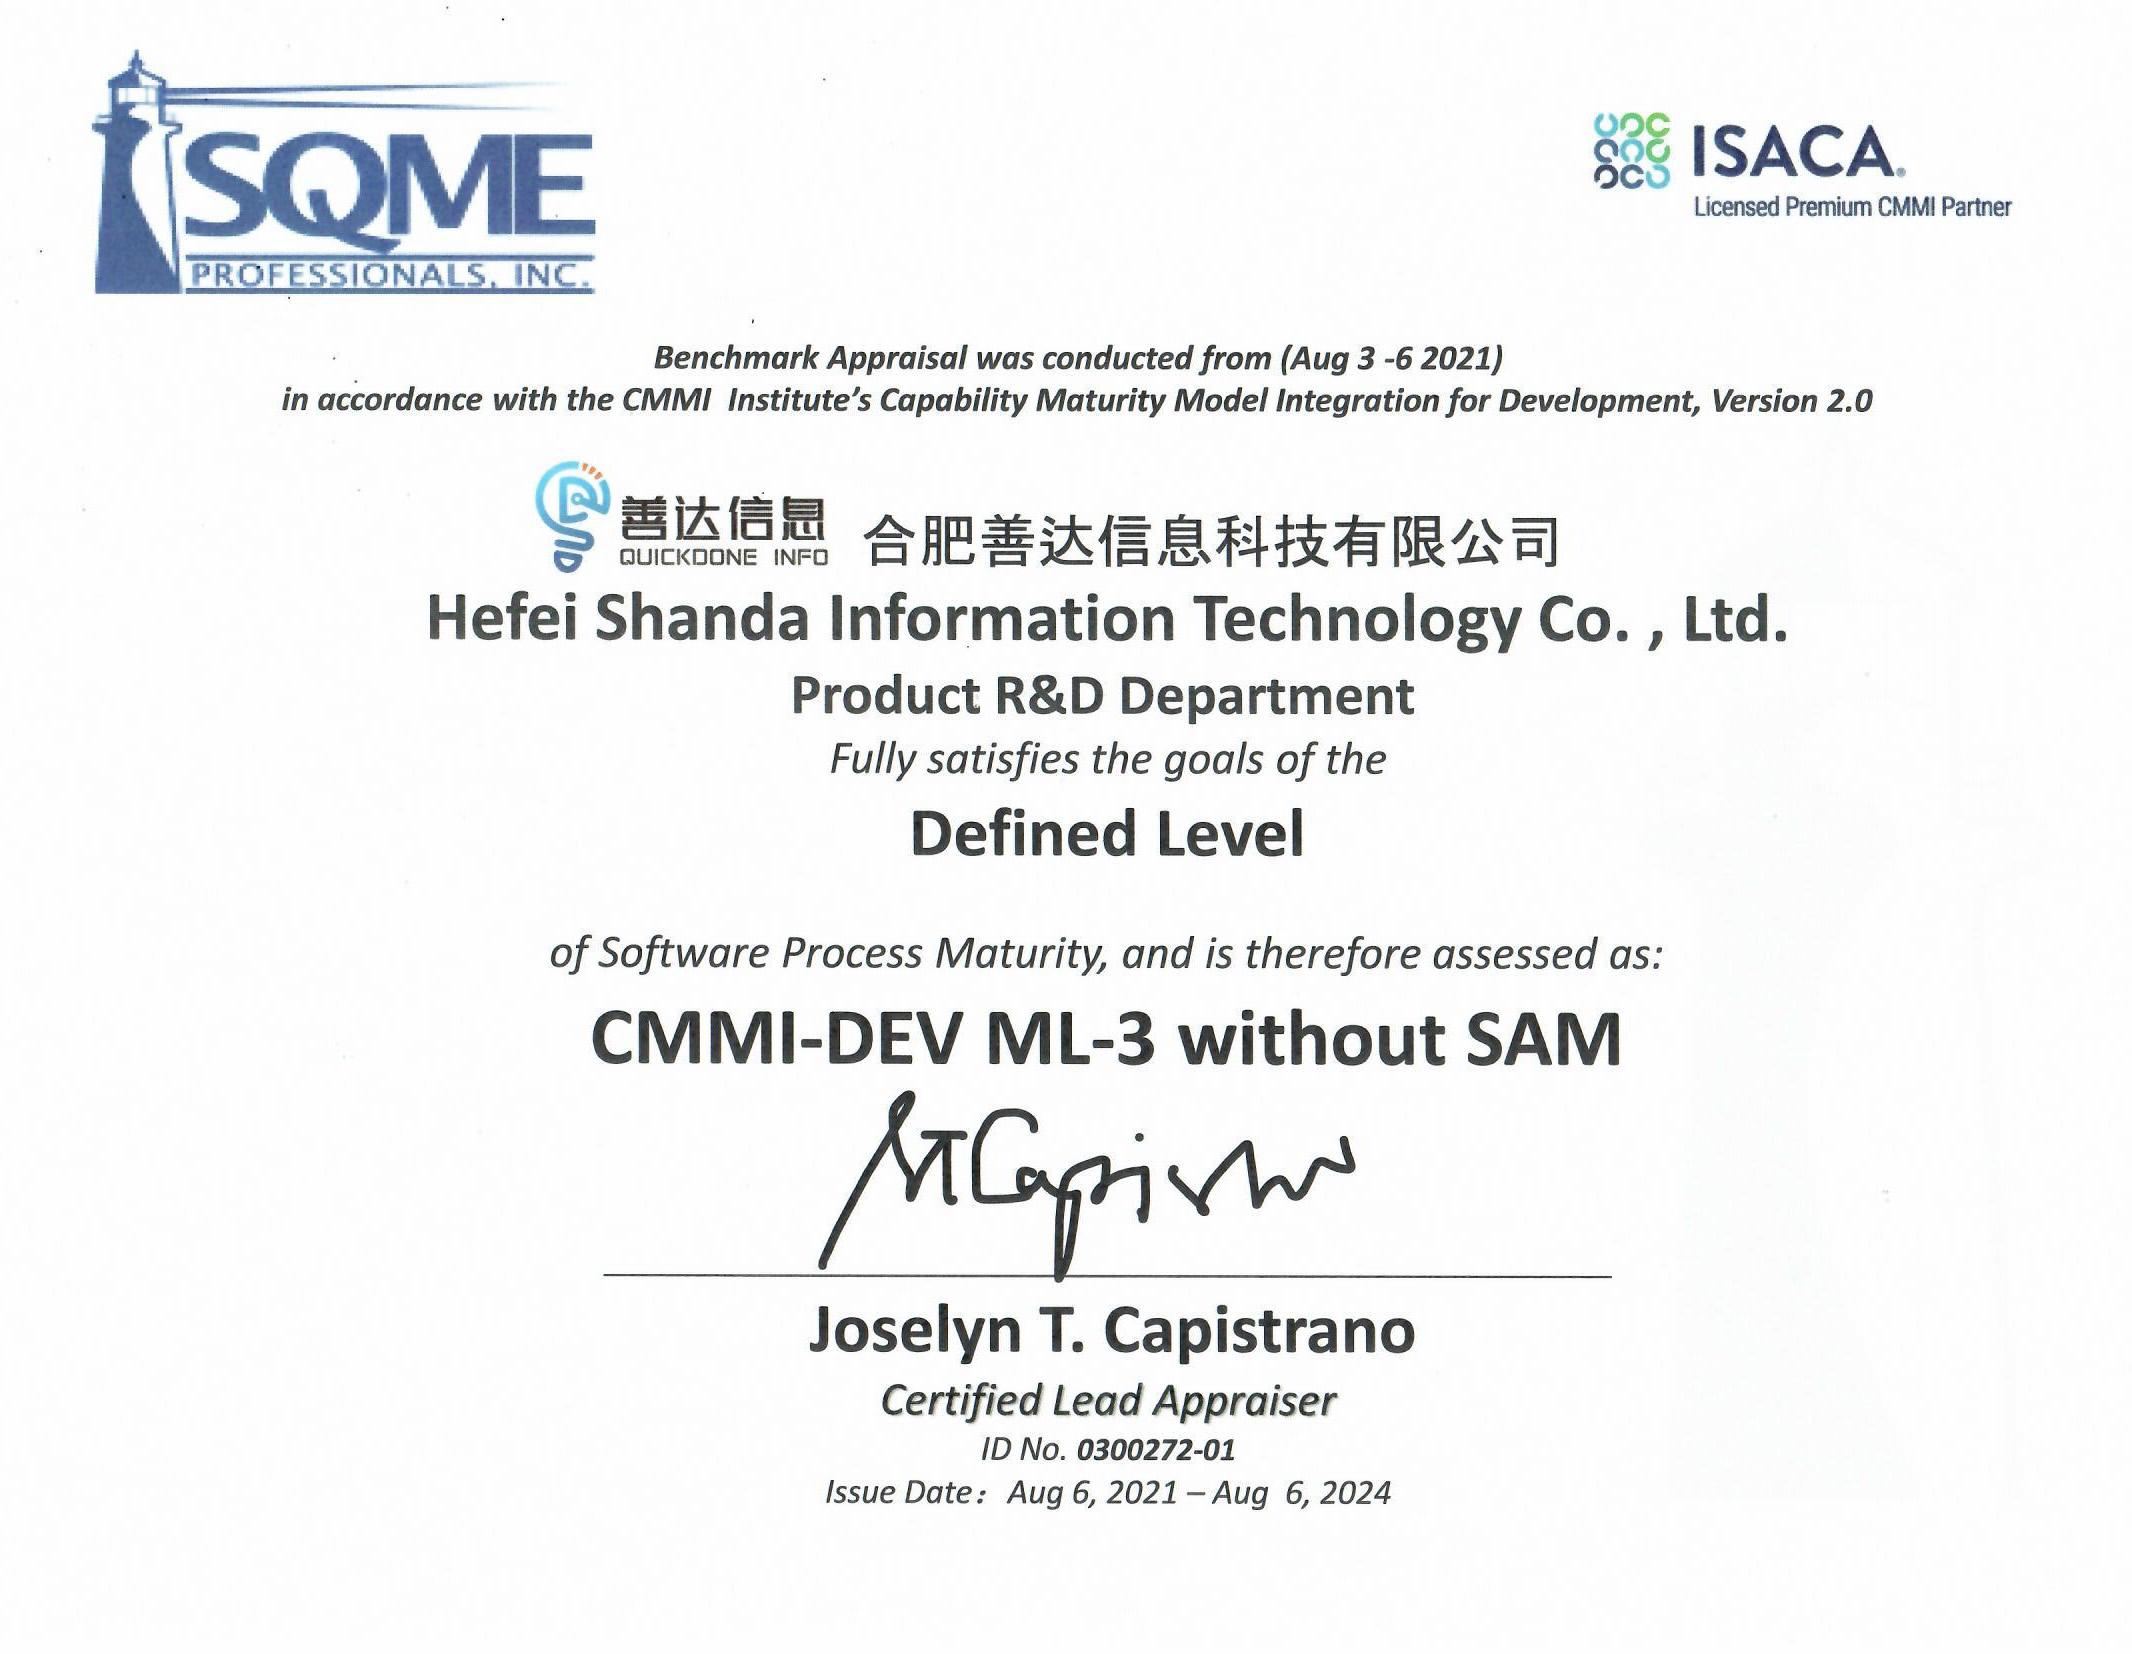 CMMI三级认证